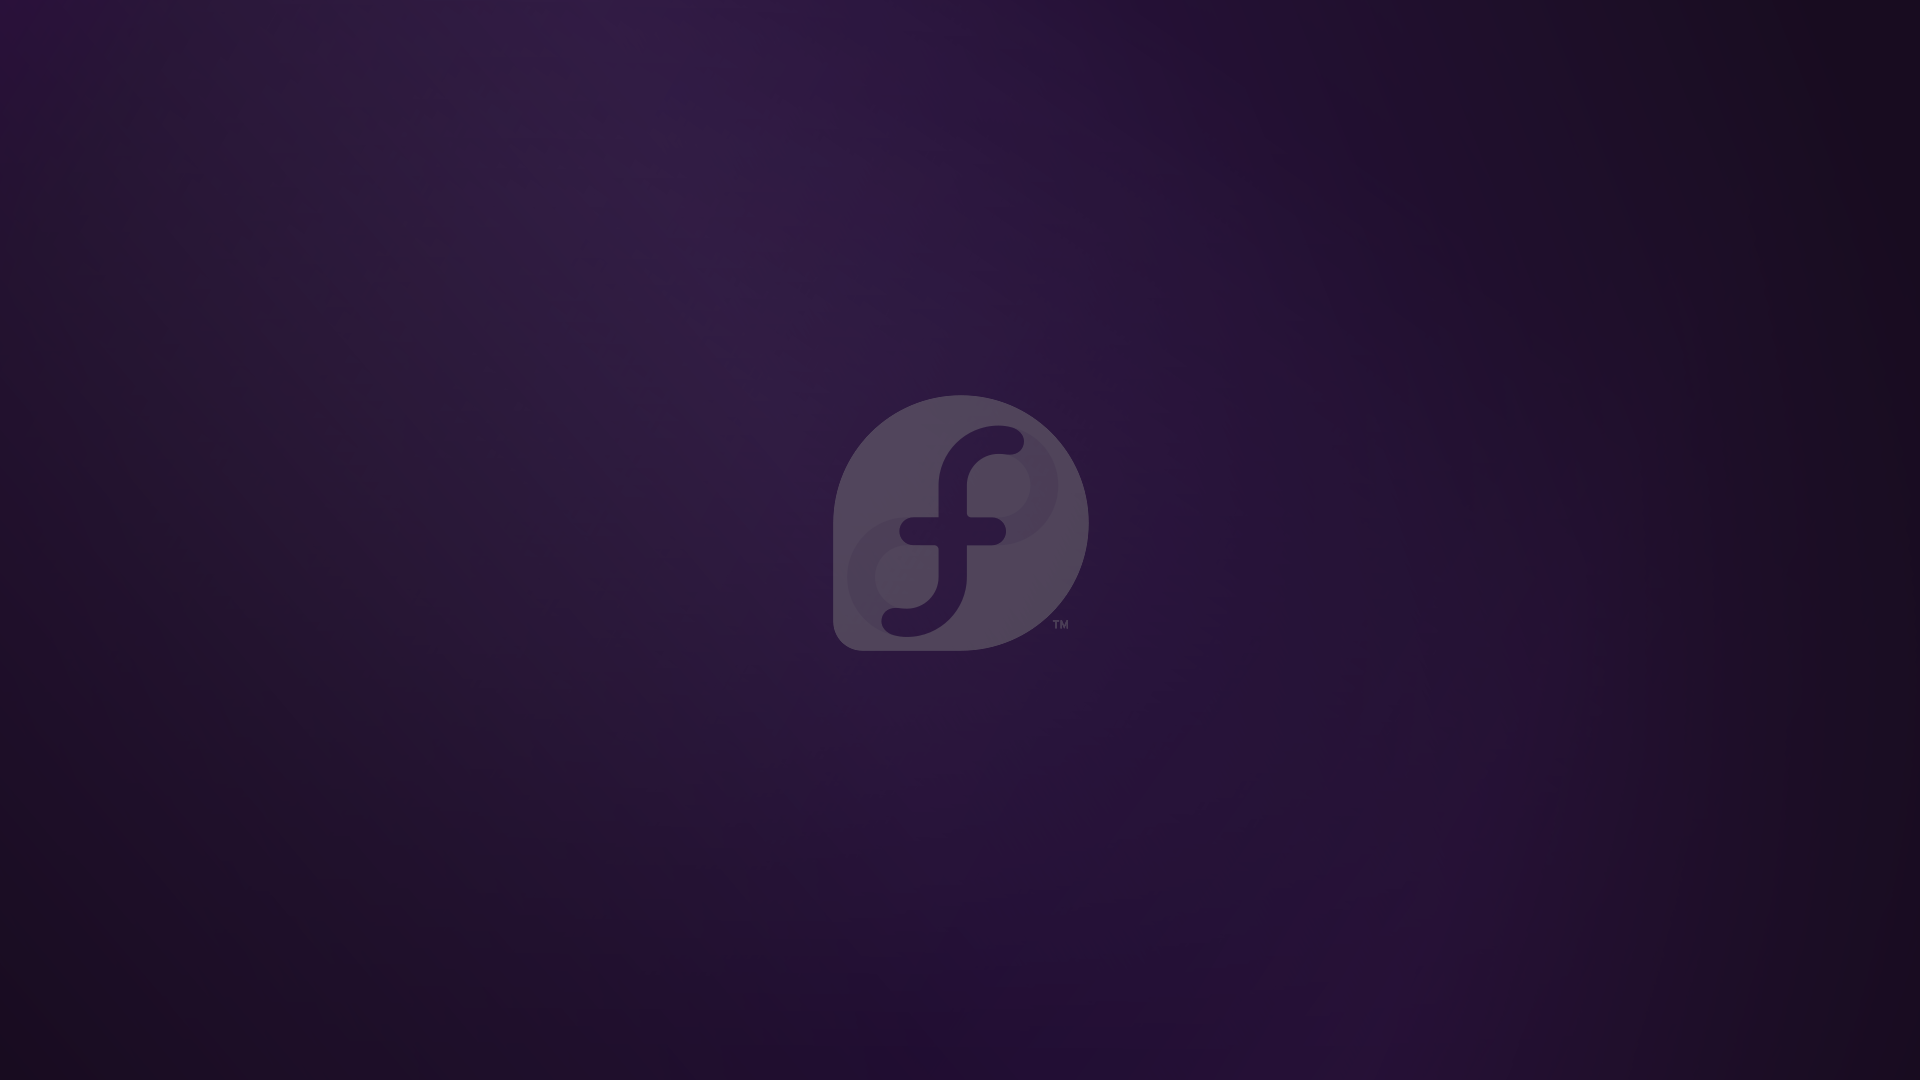 Linux Fedora Purple Background Minimalism Technology 1920x1080